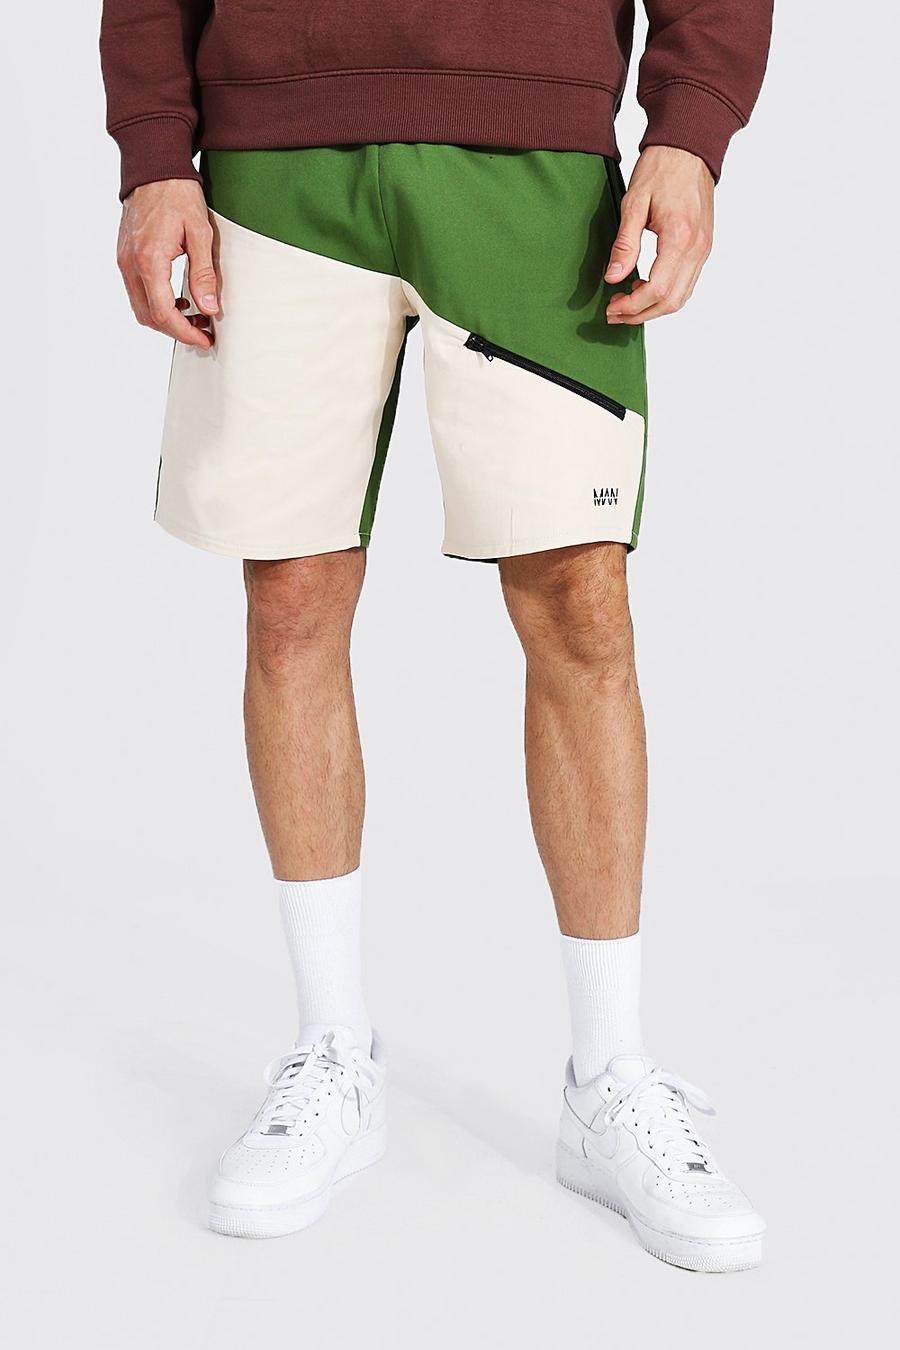 Pantaloncini Man stile Cargo effetto patchwork con tasche con zip, Khaki image number 1